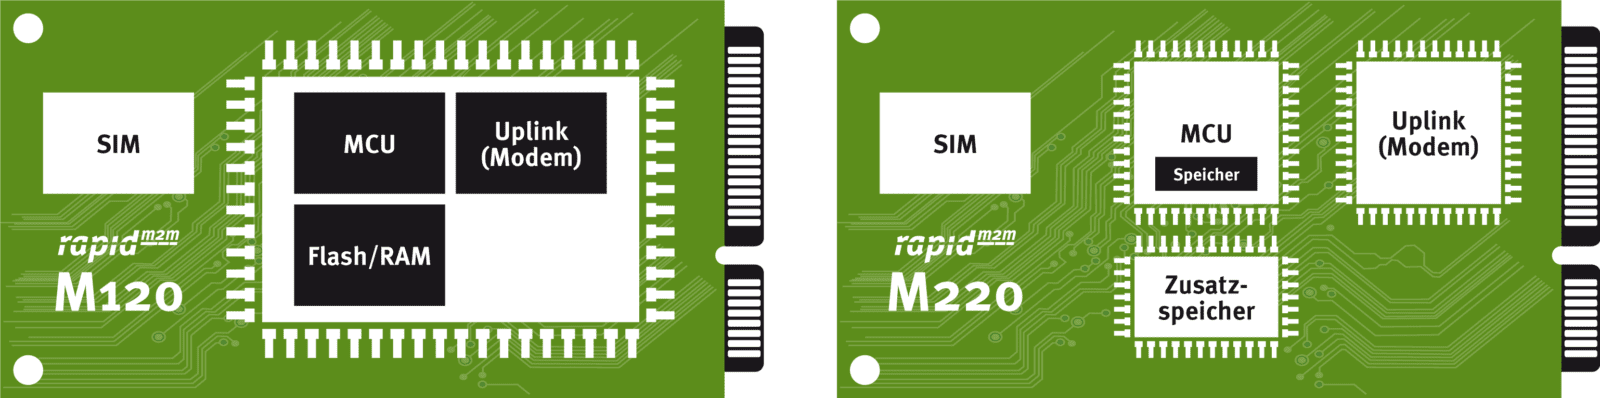 Vergleich rapidM2M M120 und rapidM2M M220 - Familienkonzept